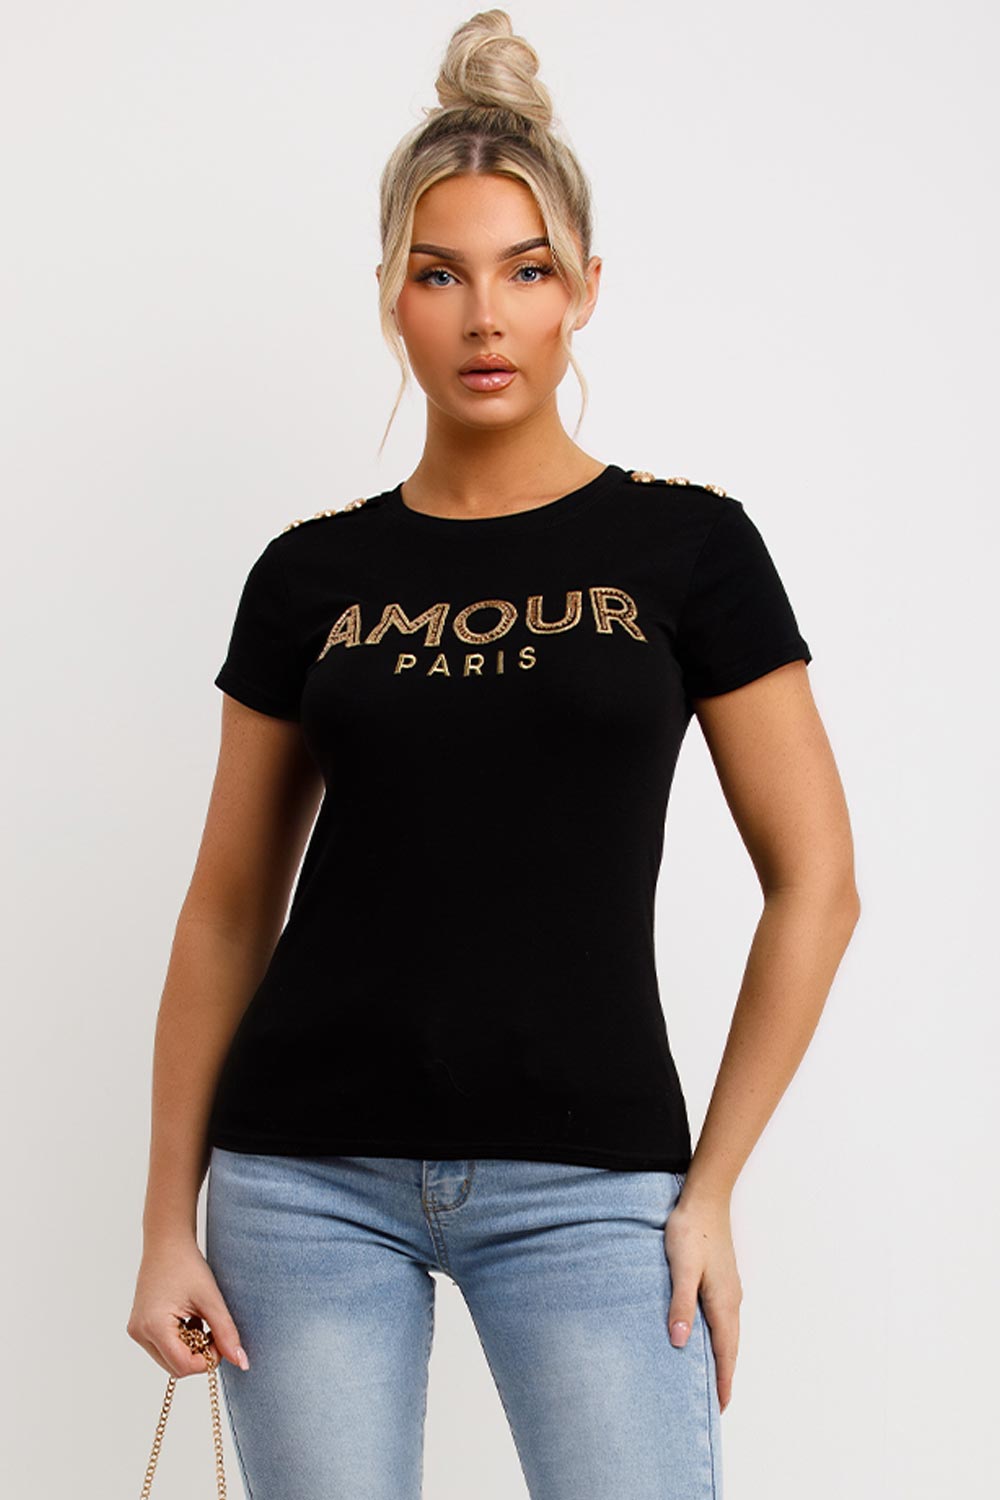 amour paris black t shirt with gold buttons